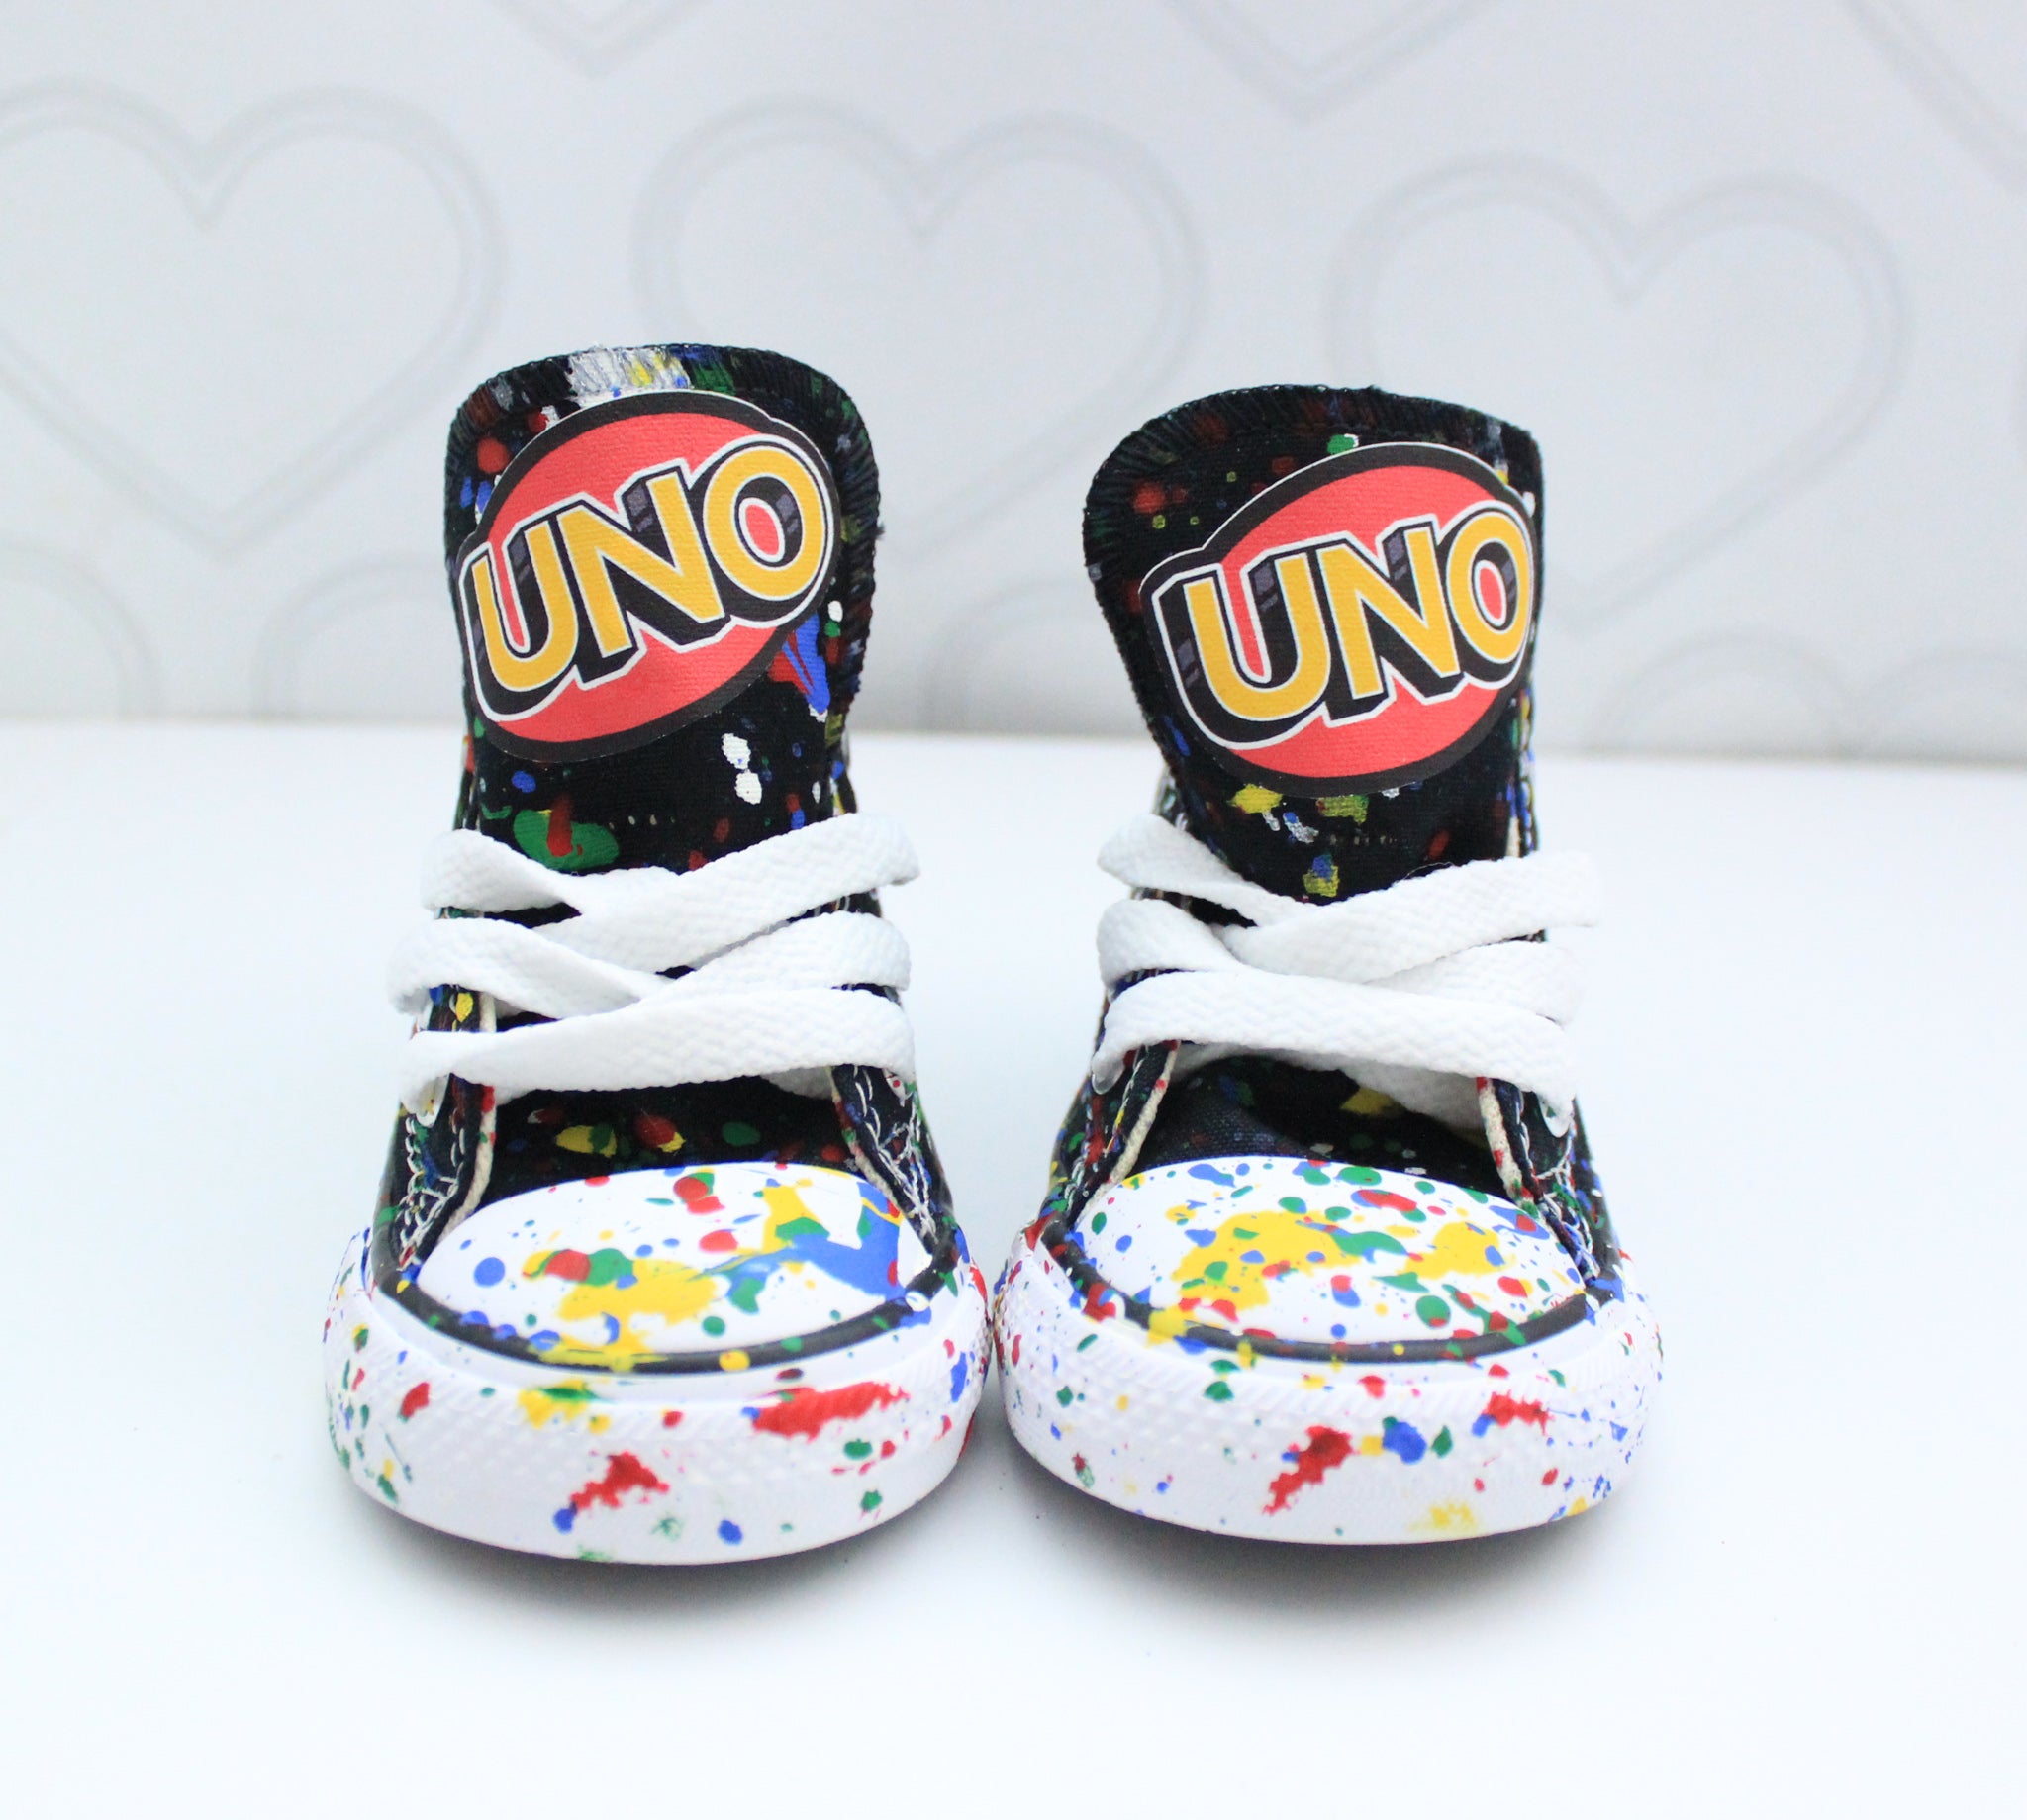 Gearceerd leer orkest Uno shoes- Uno Converse-Boys Uno Shoes – Pink Toes & Hair Bows